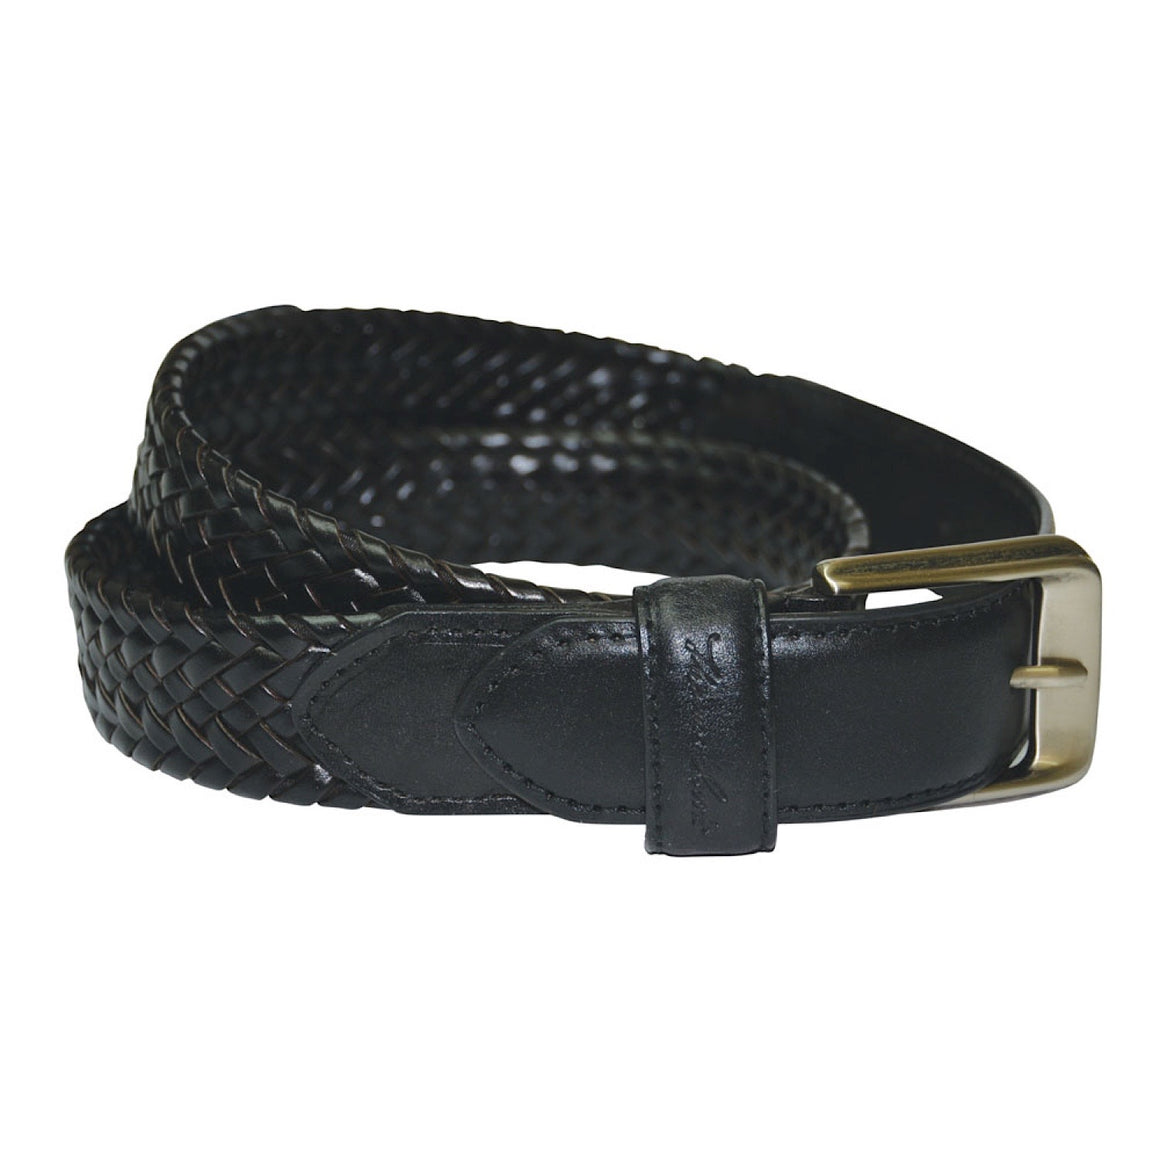 Thomas Cook Harry Leather Braided Belt Black